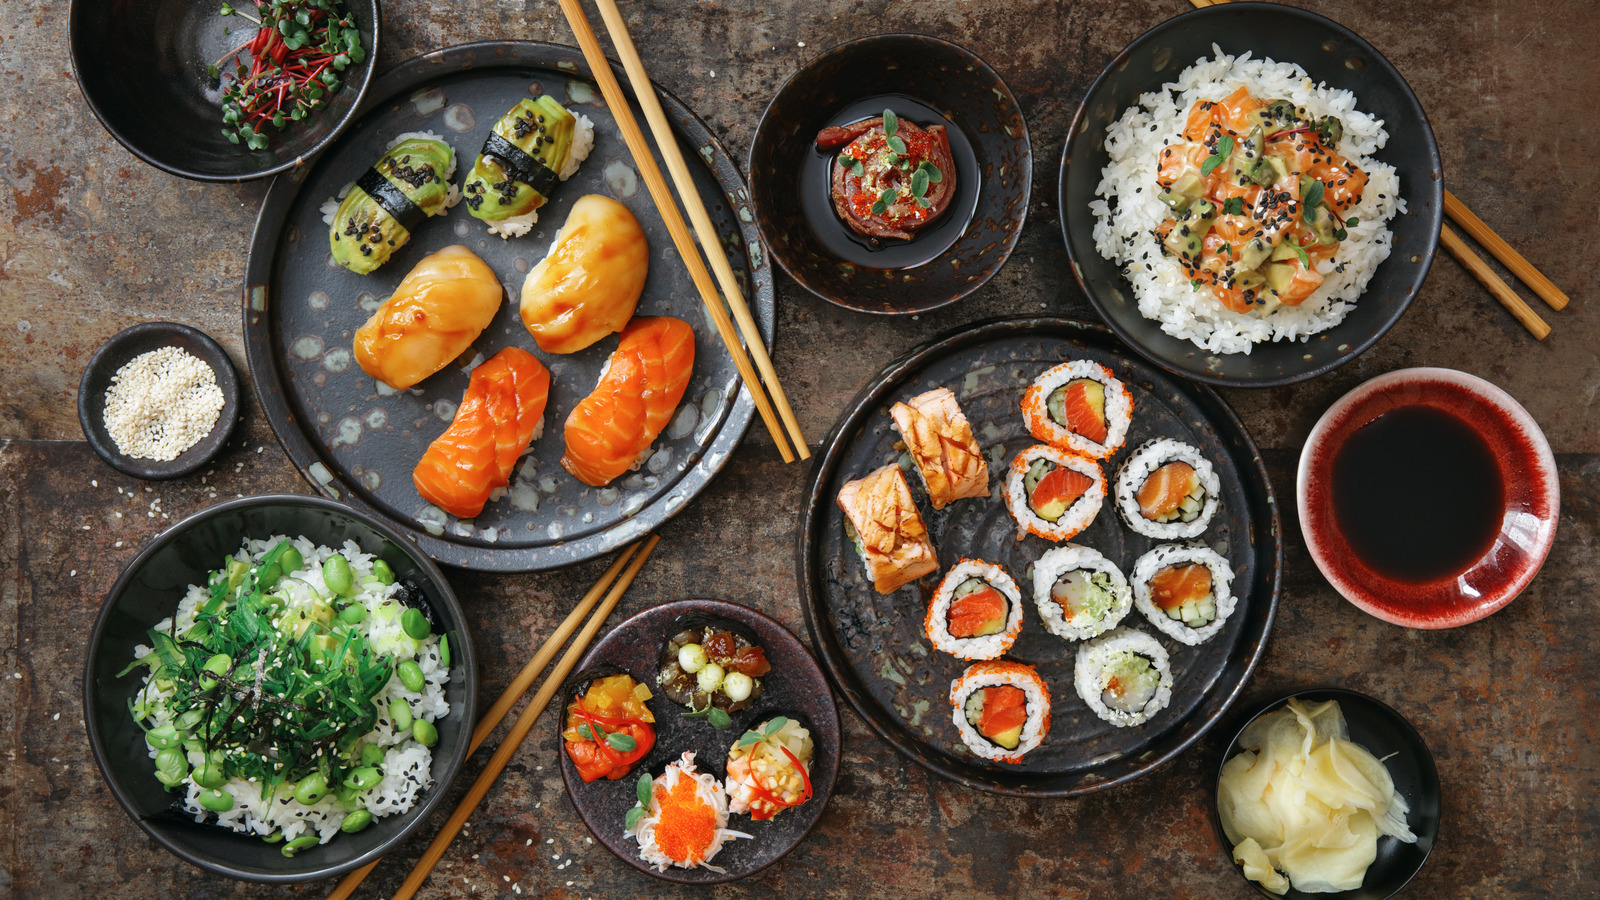 SUSHI MASTER SET. 12-piece Sushi Making Kit for the Asian Cuisine